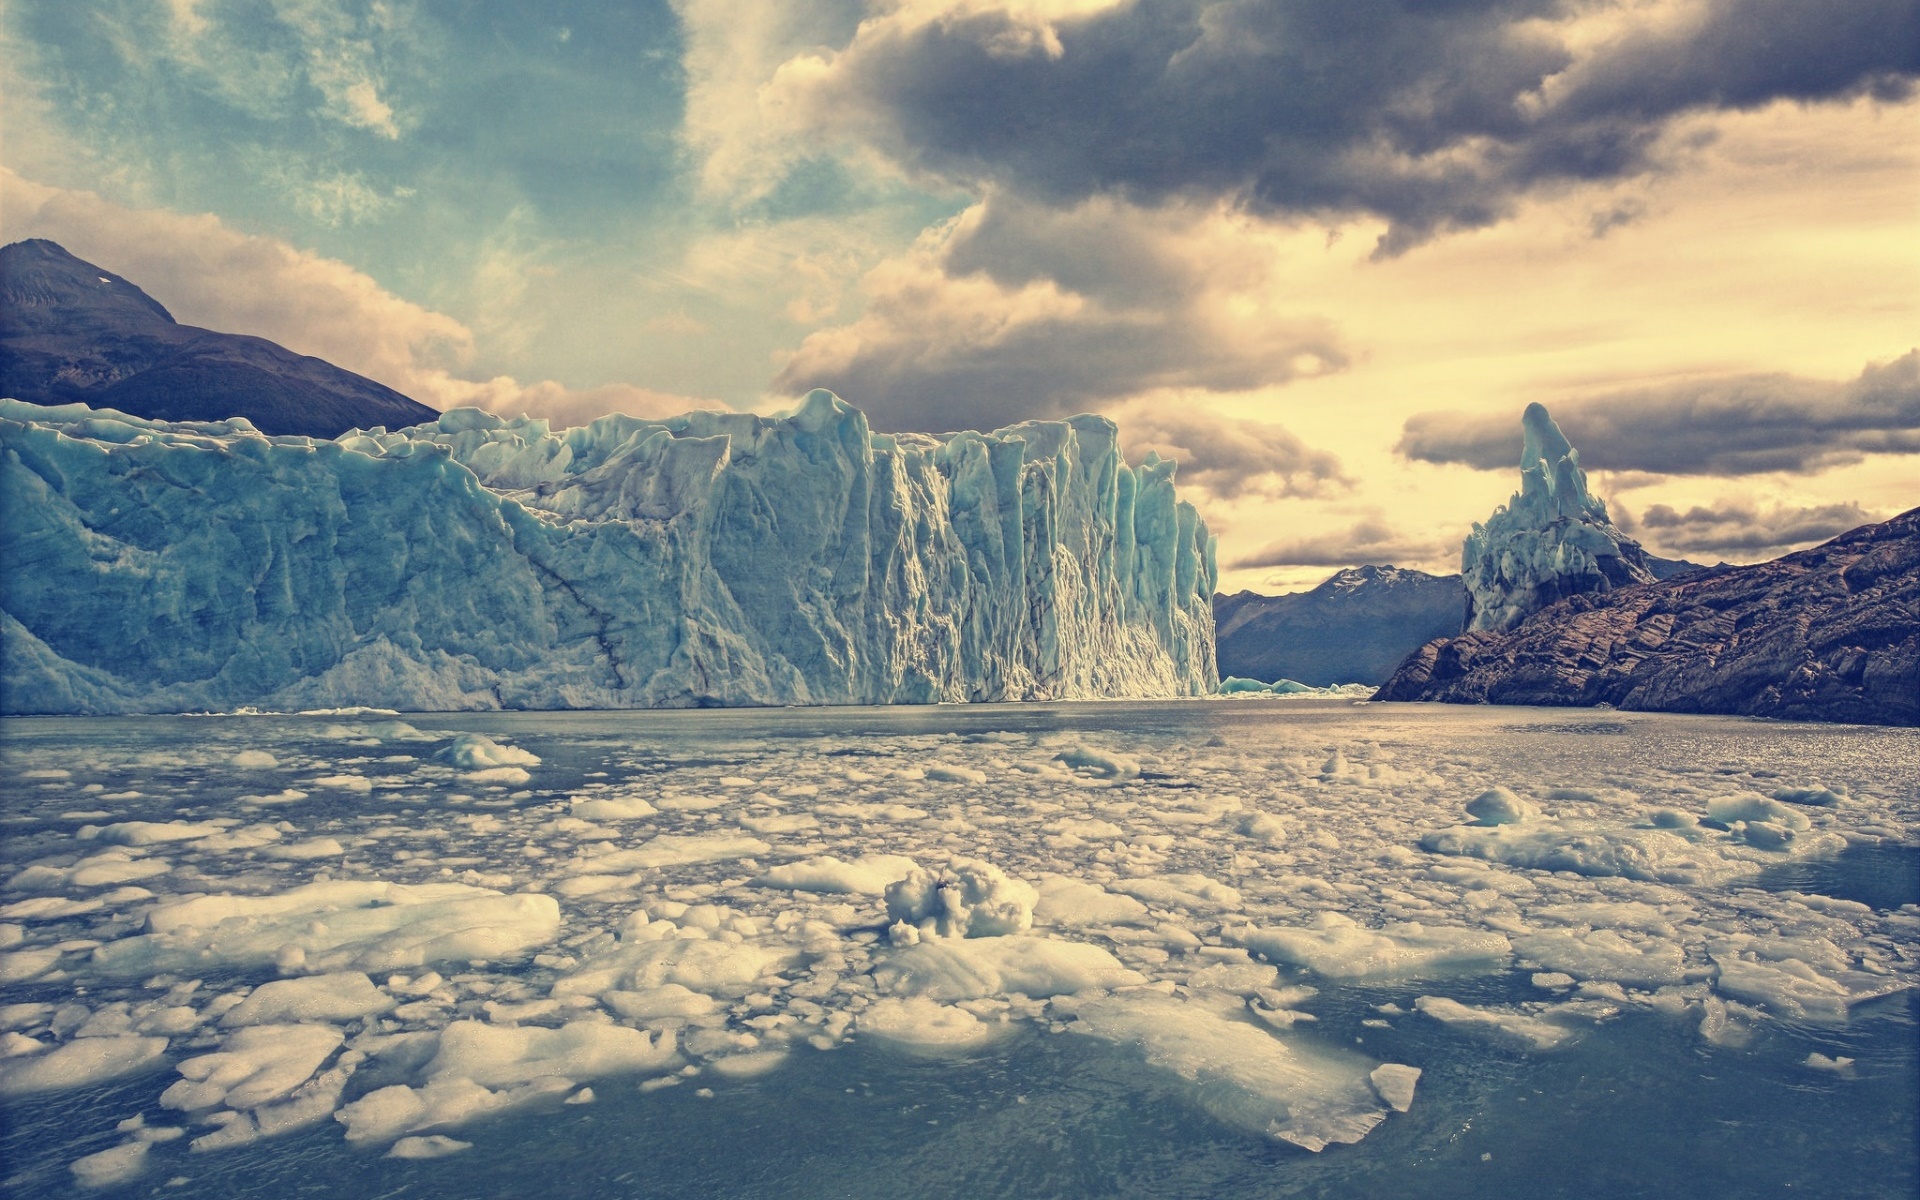 Descargar fondos de escritorio de Glaciar Perito Moreno HD